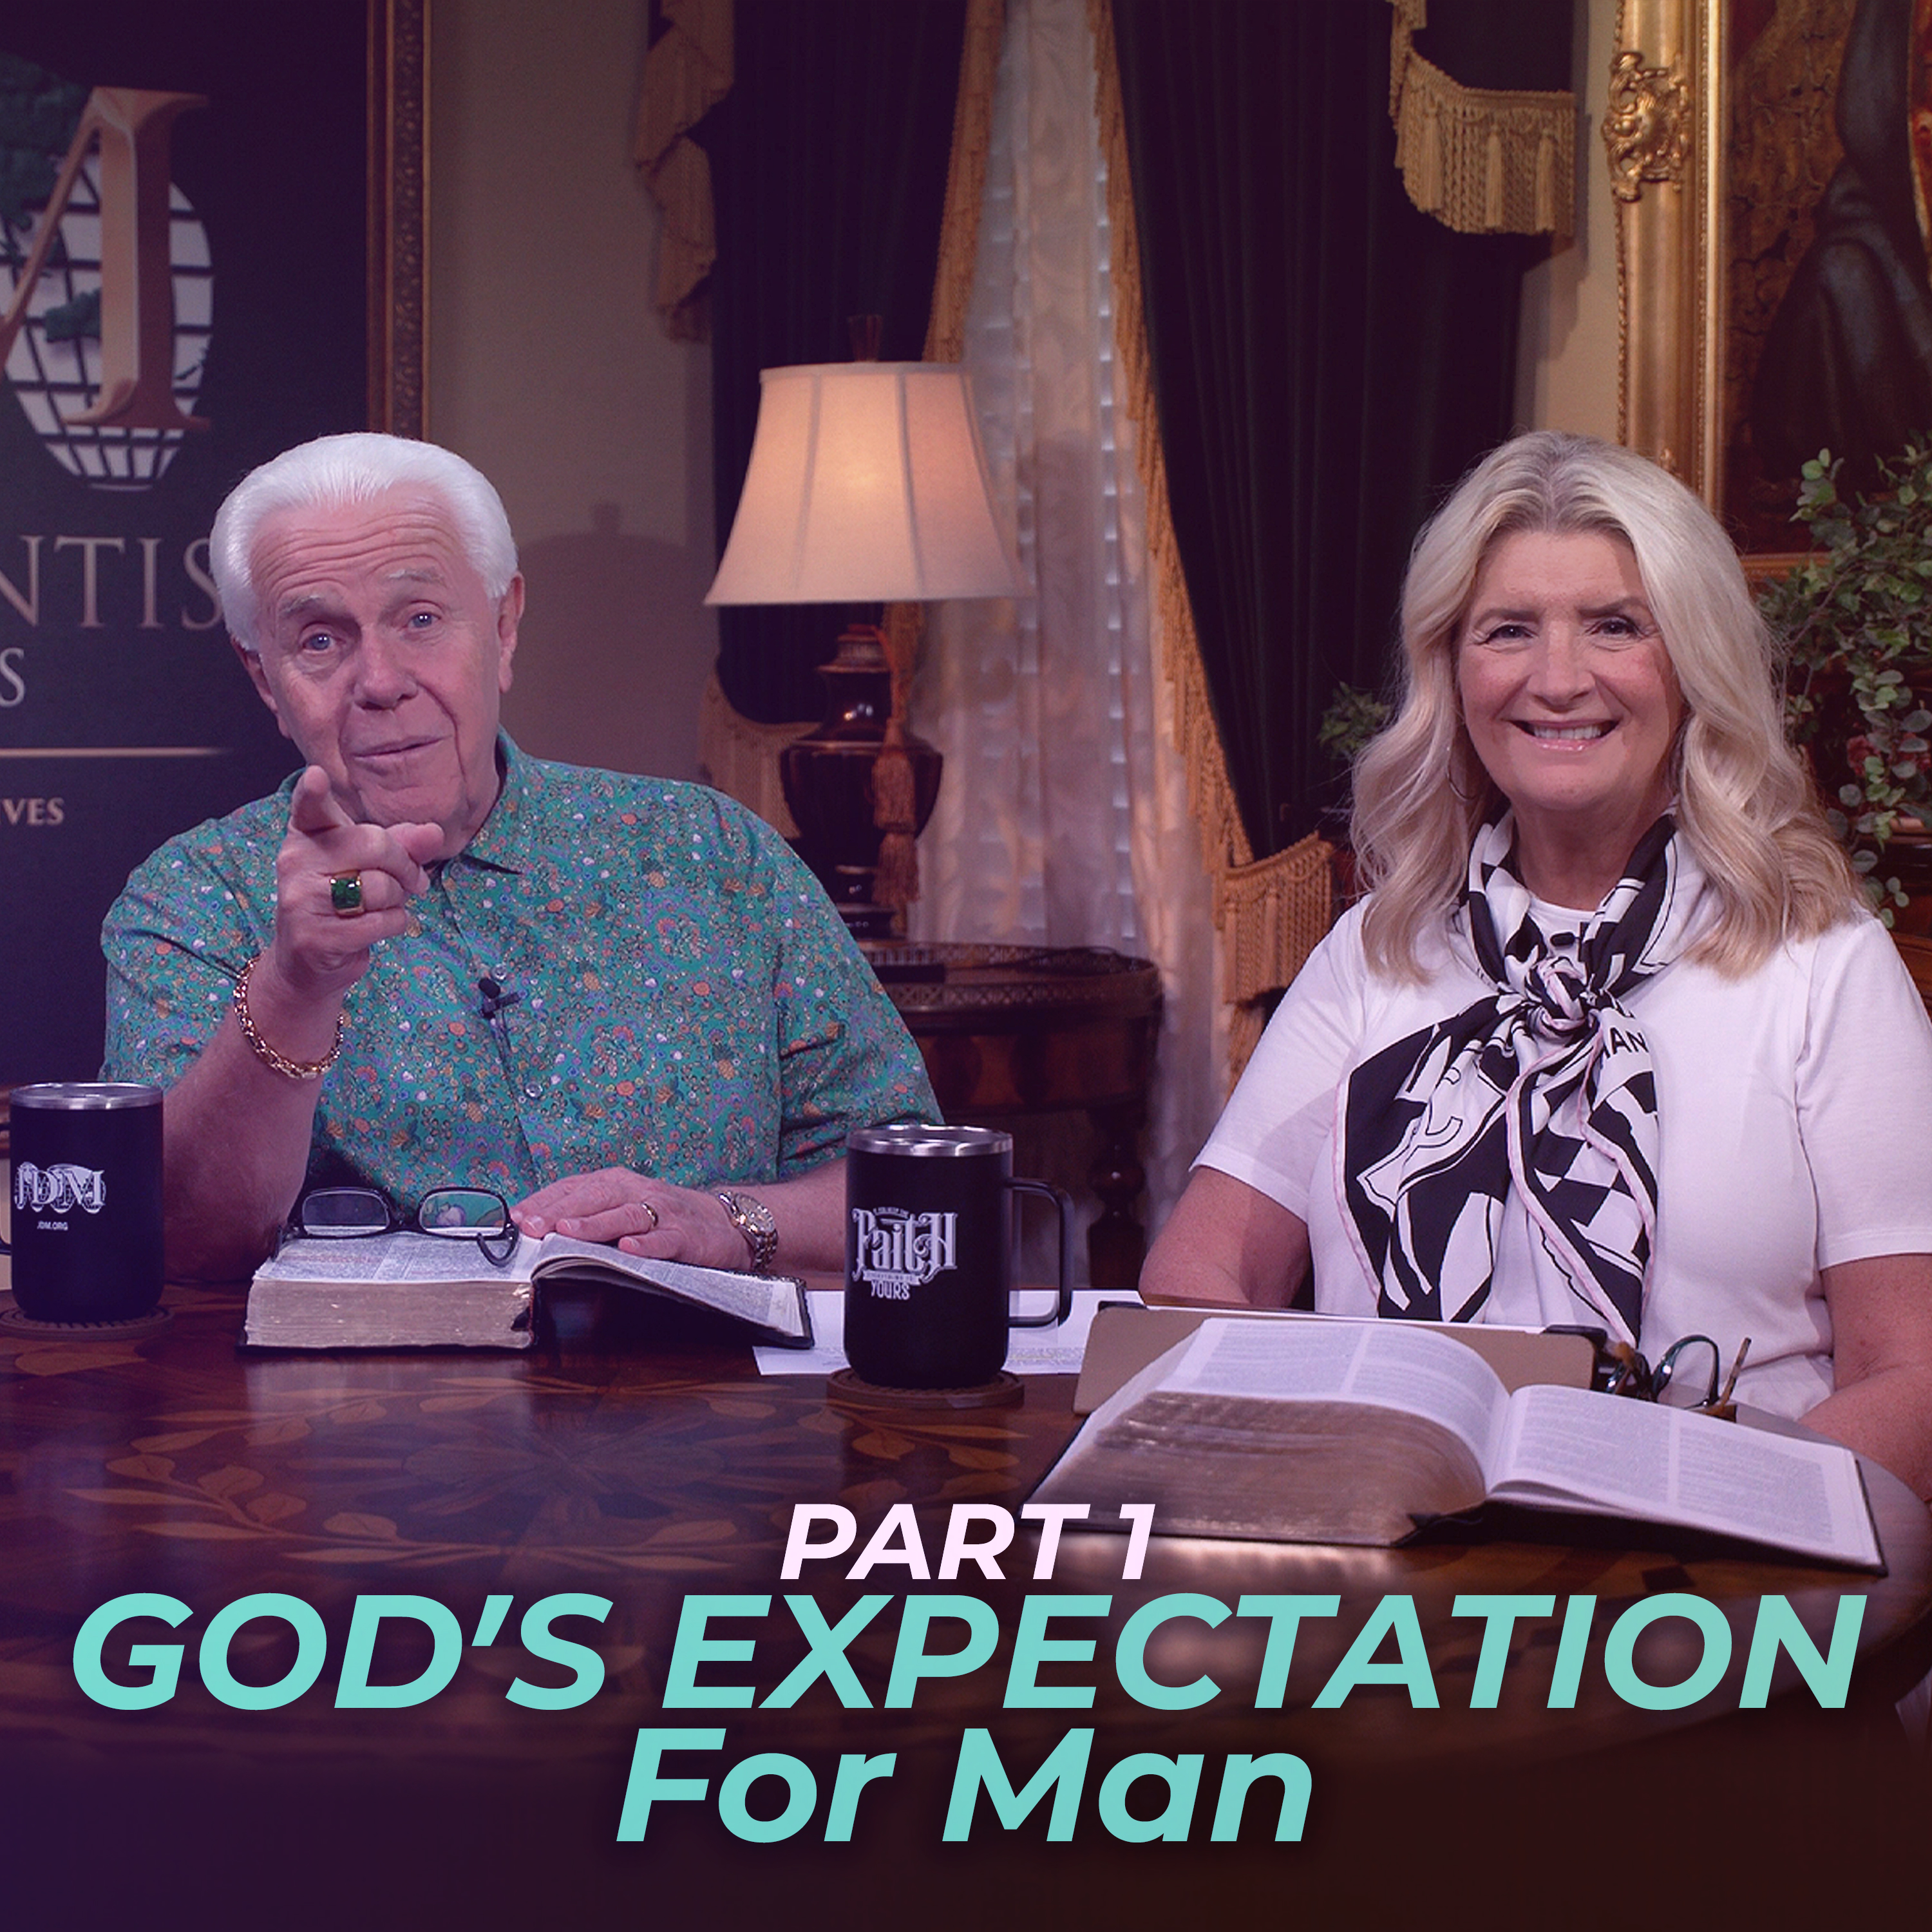  God’s Expectation For Man, Part 1